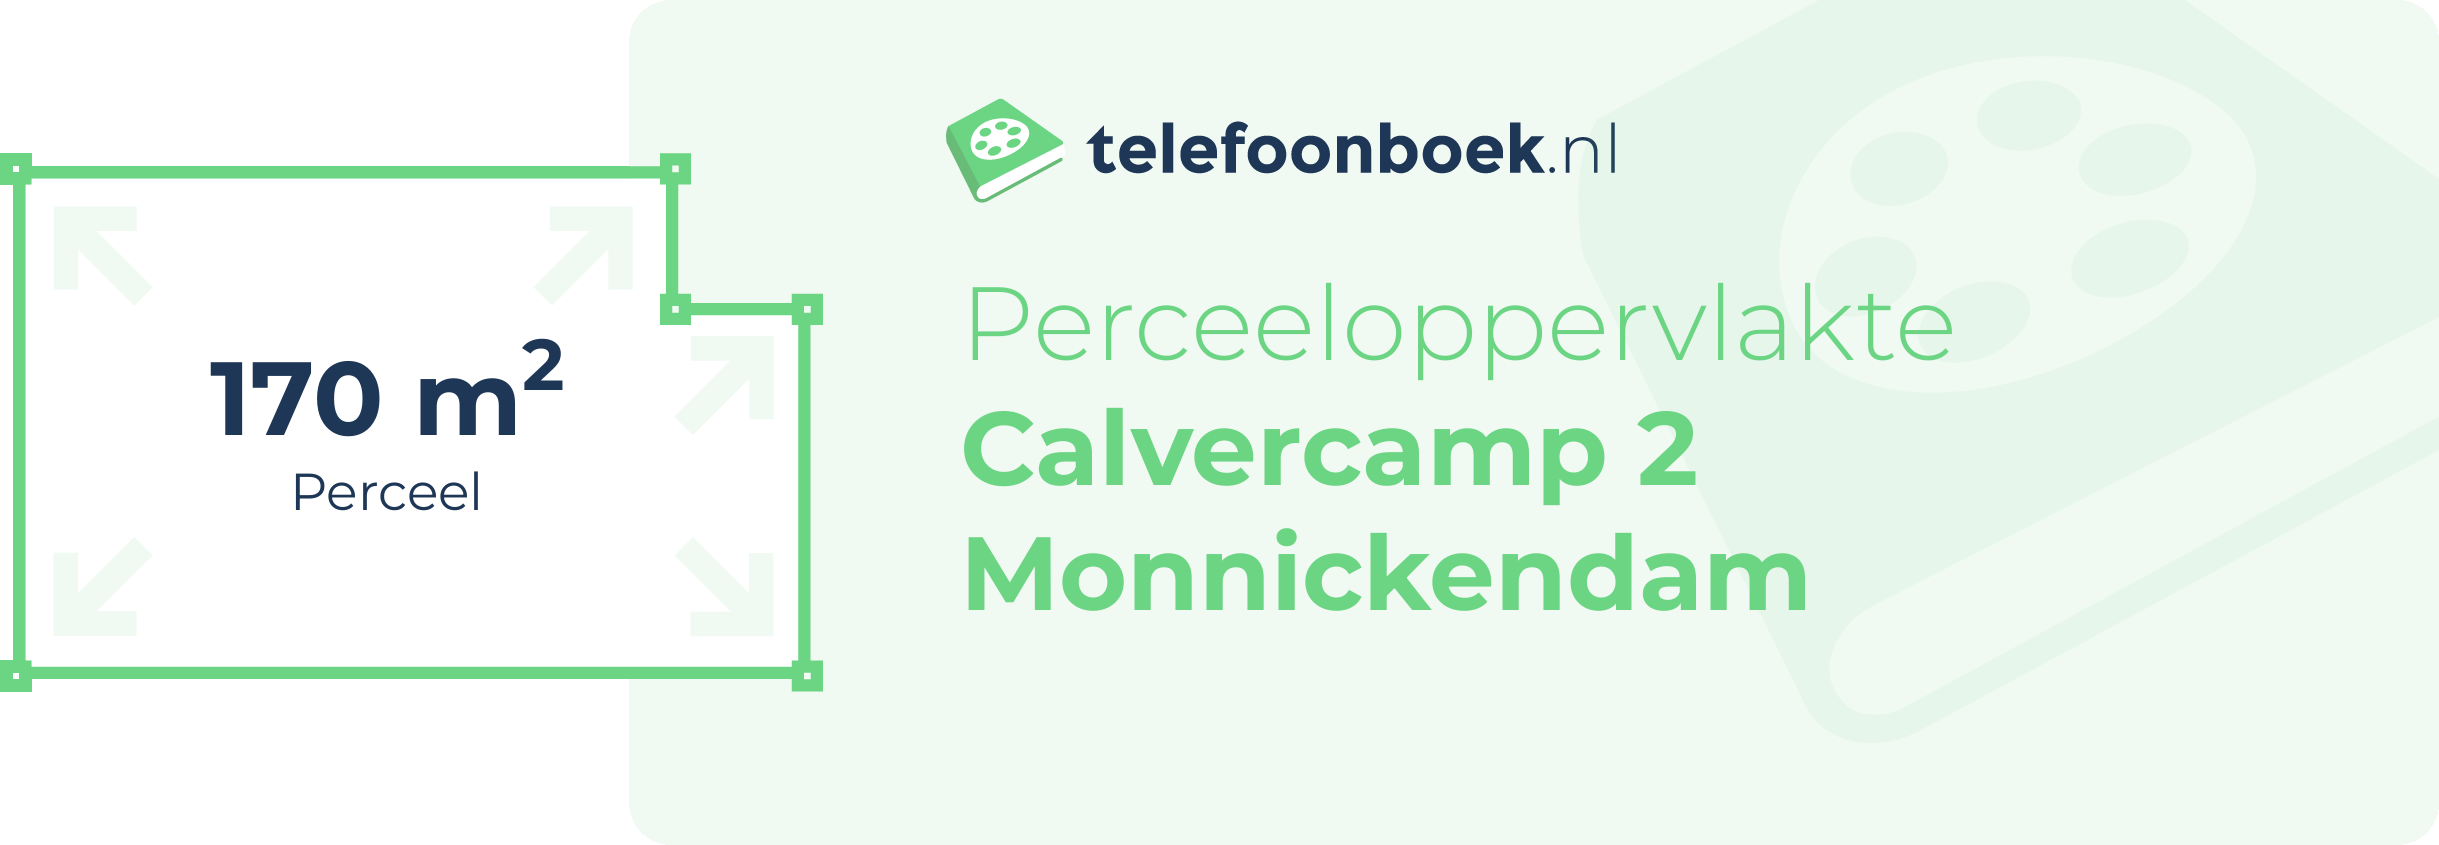 Perceeloppervlakte Calvercamp 2 Monnickendam